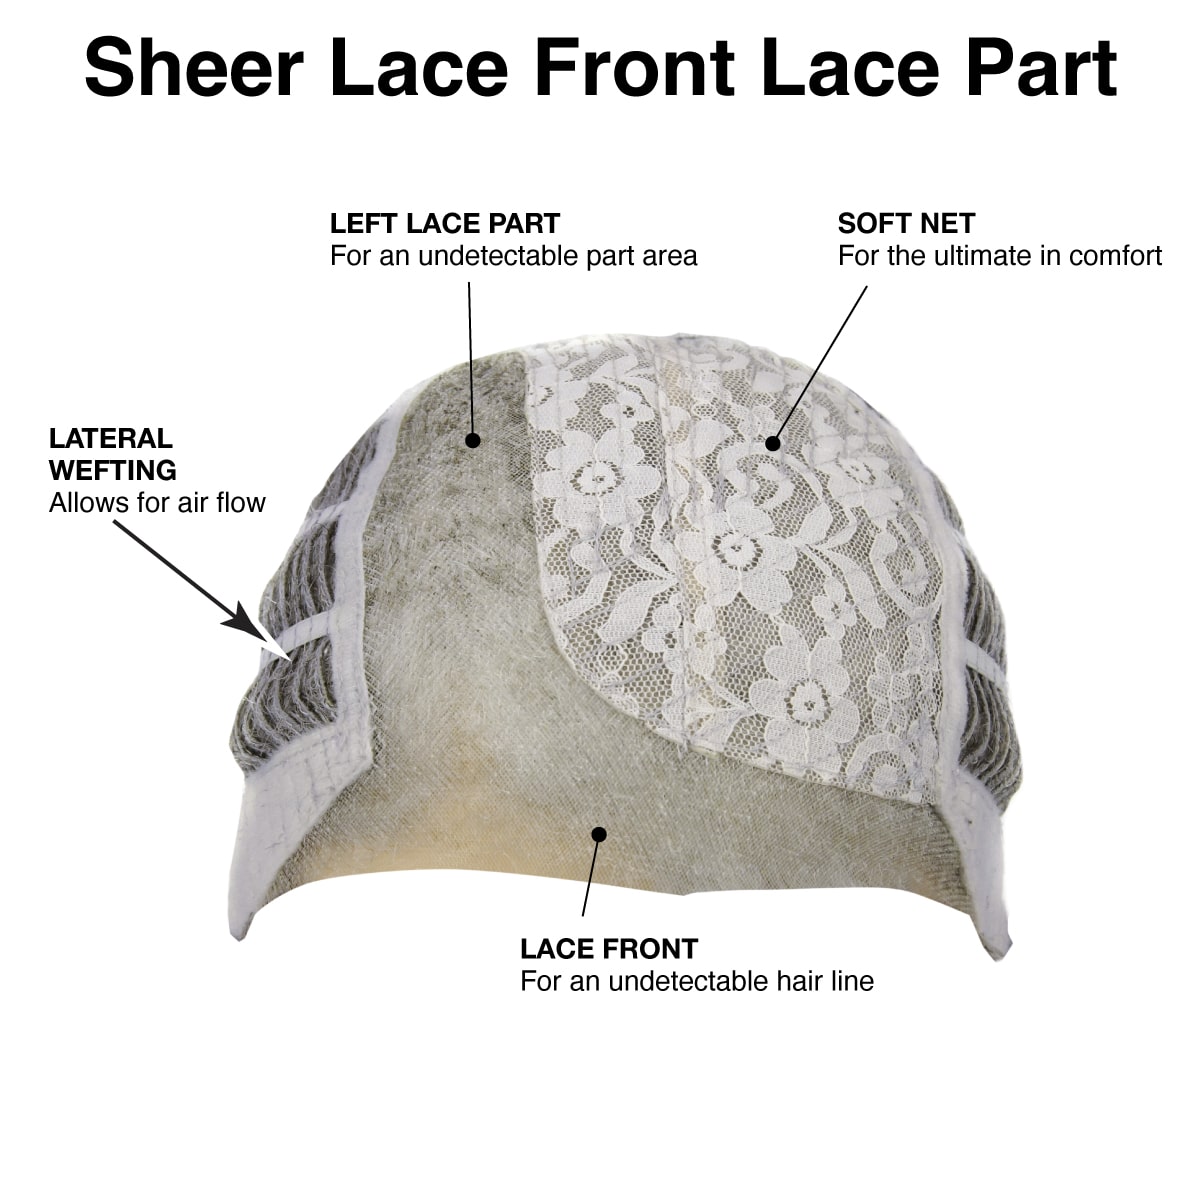 Sheer lace front lace part